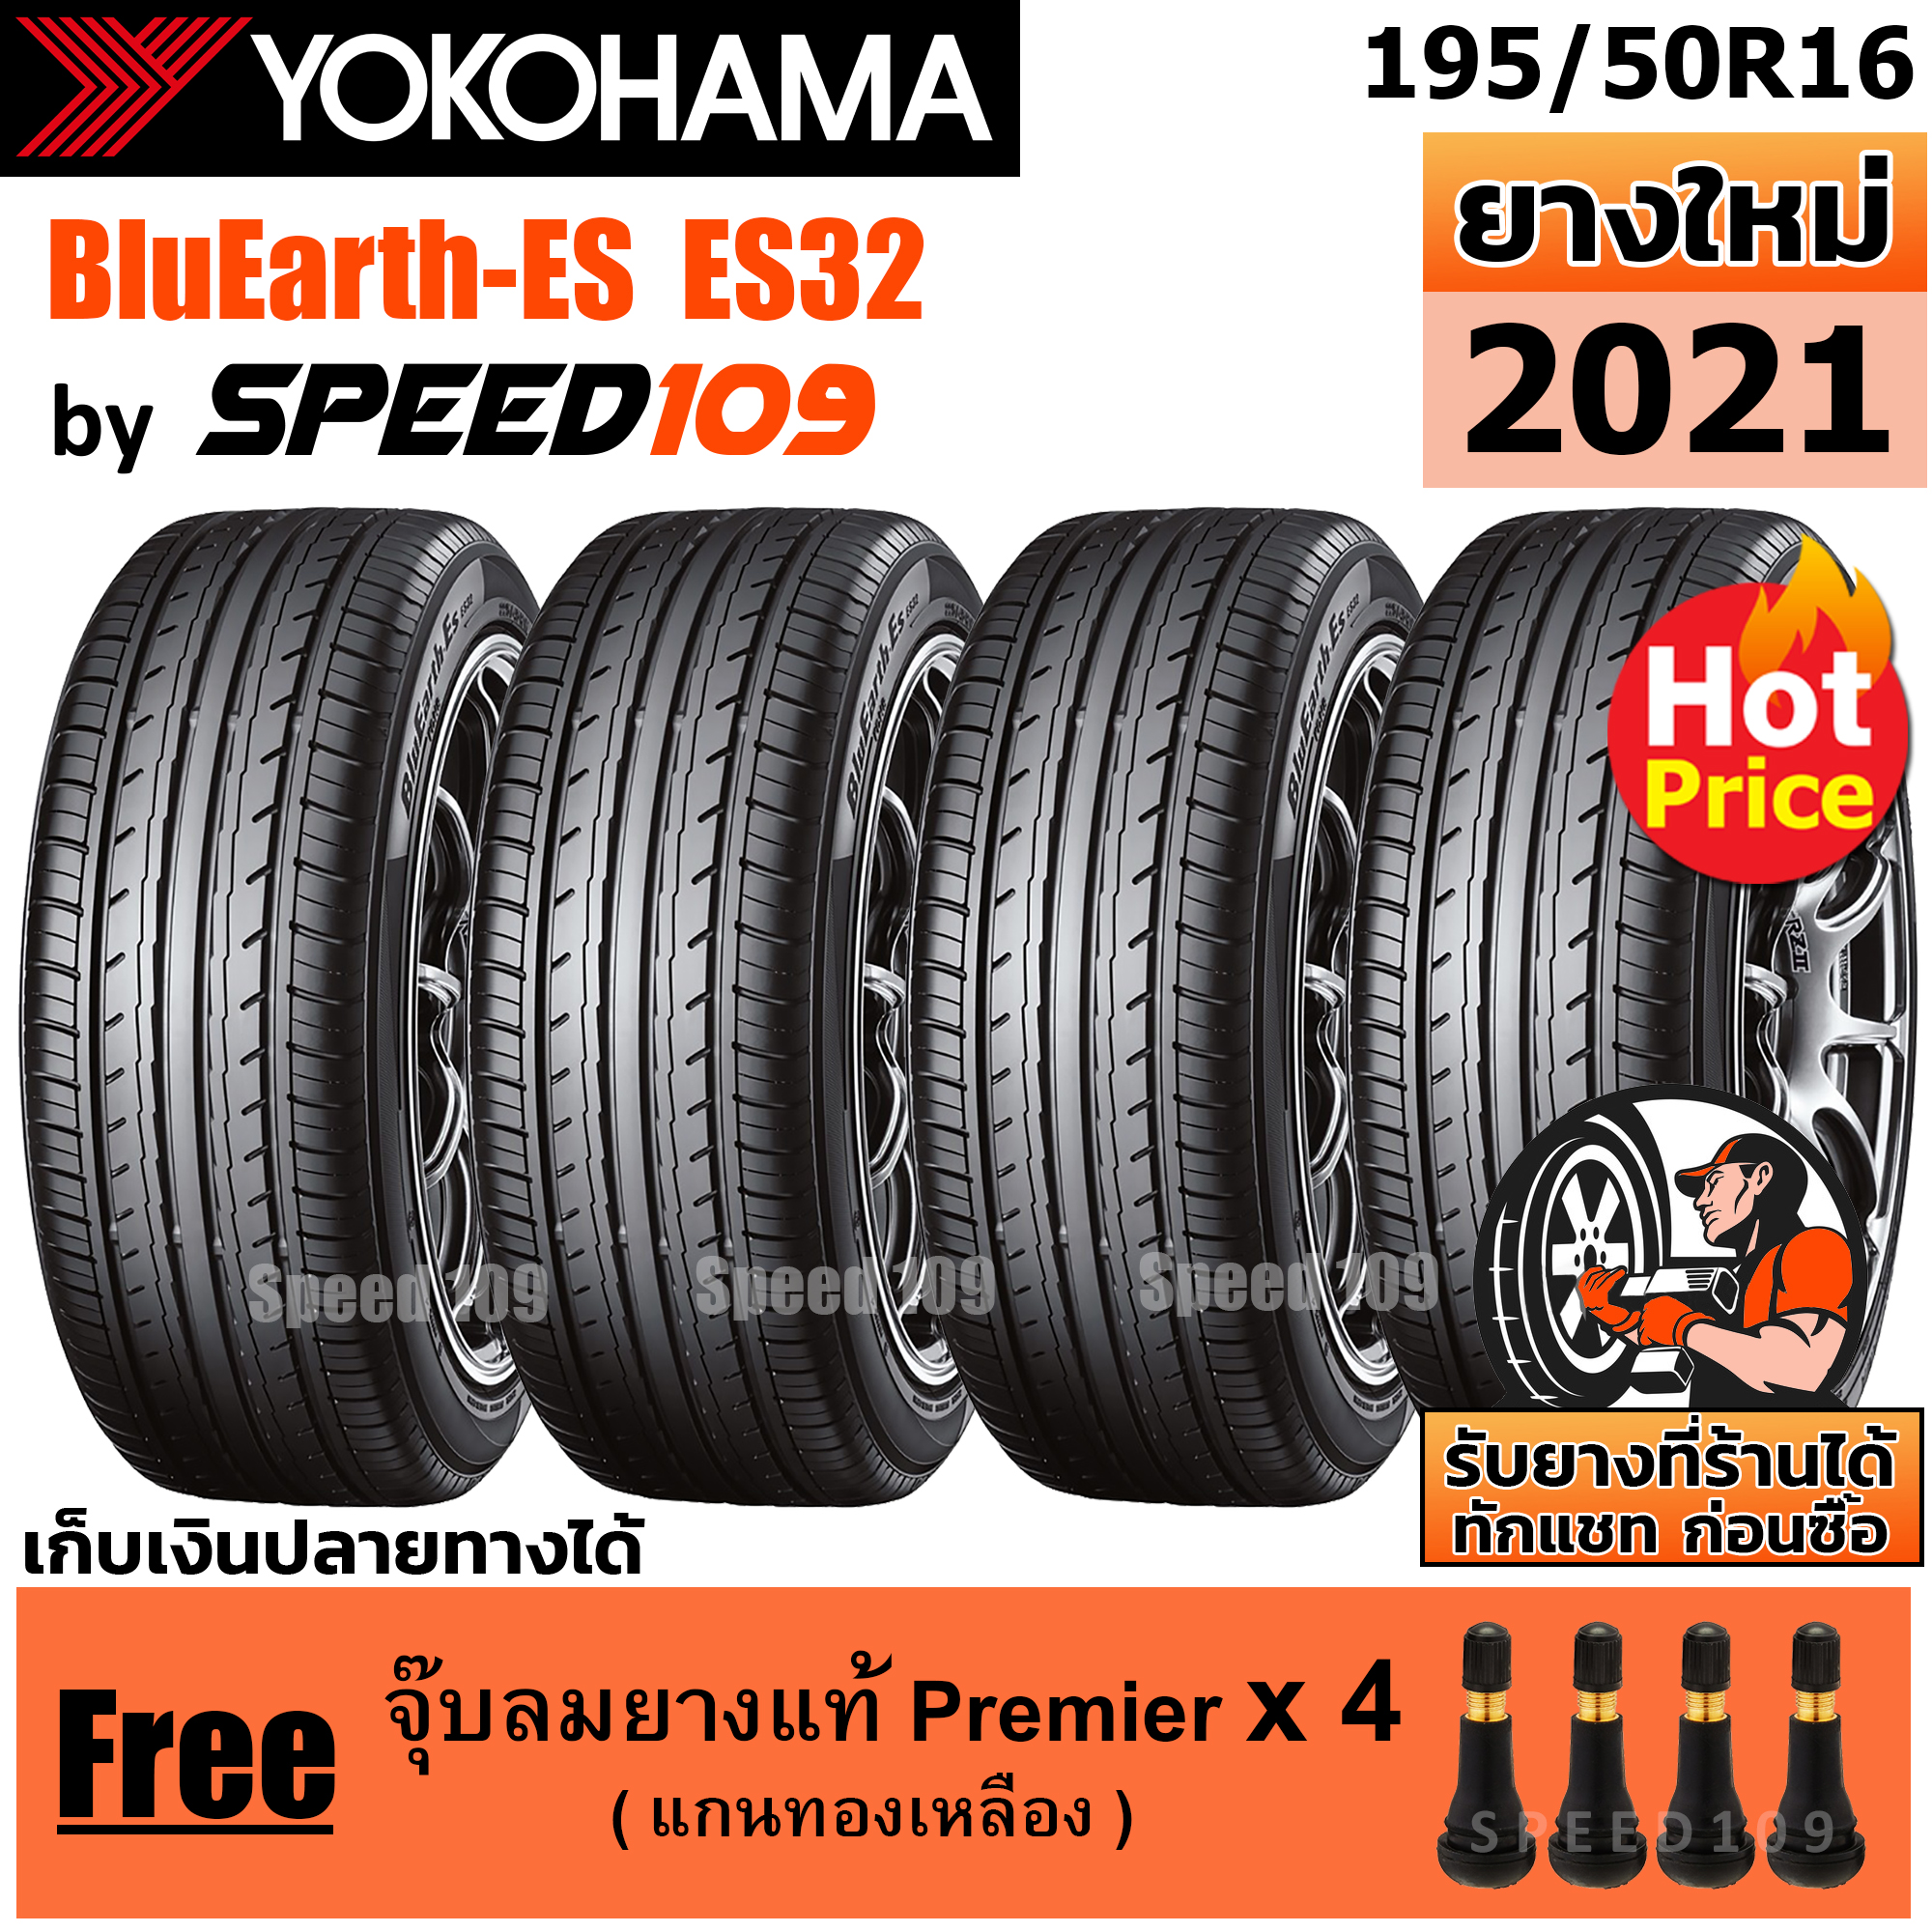 YOKOHAMA ยางรถยนต์ ขอบ 16 ขนาด 195/50R16 รุ่น BluEarth-ES ES32 - 4 เส้น (ปี 2021)